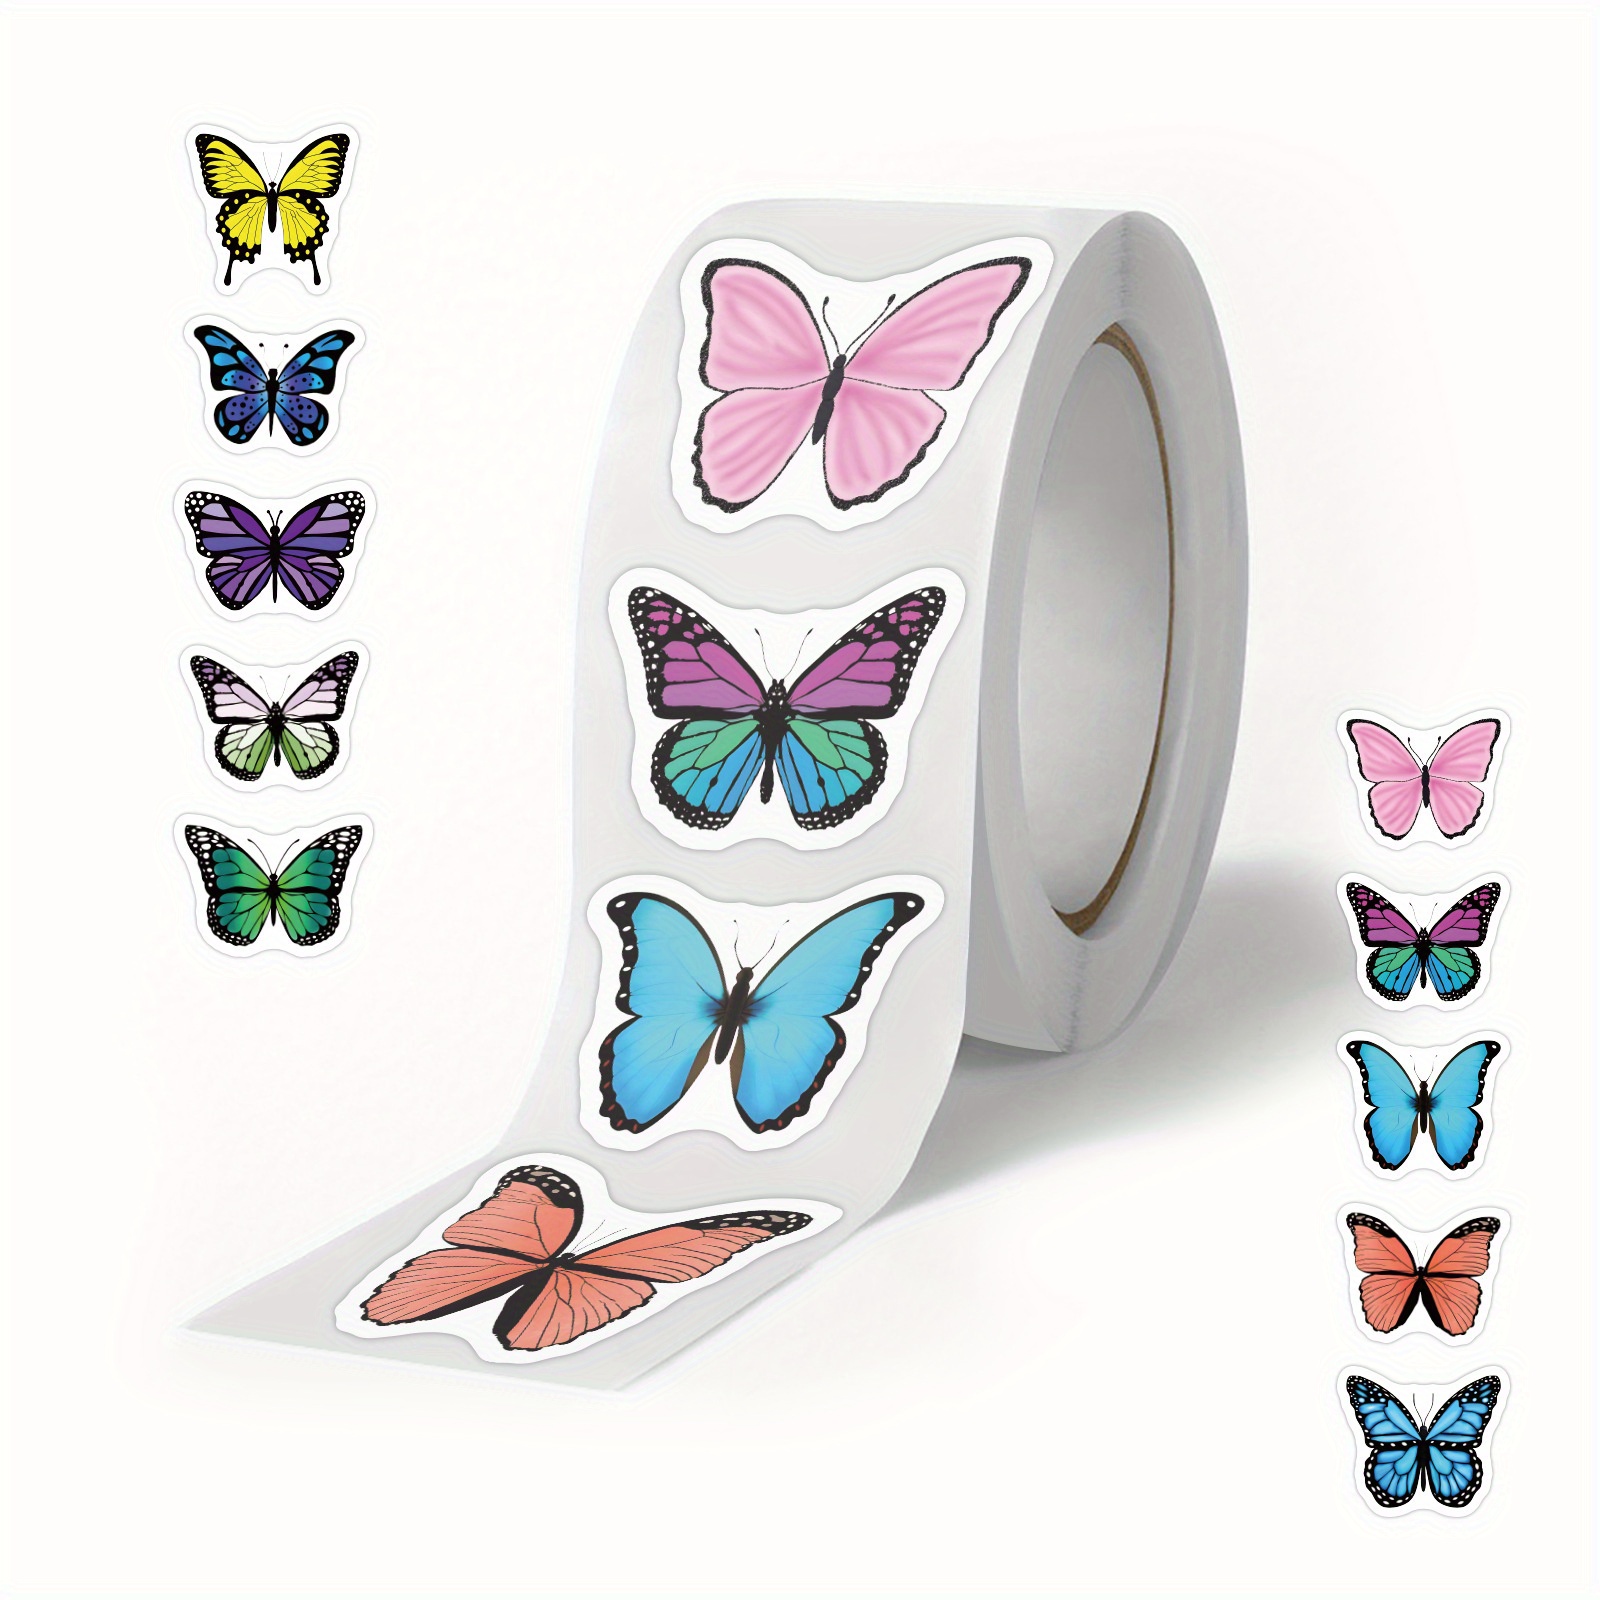 

500pcs Cute Cartoon Butterfly Sticker, Funny Graffiti Diy Skateboard Luggage Mobile Phone Decorative Waterproof Stickers